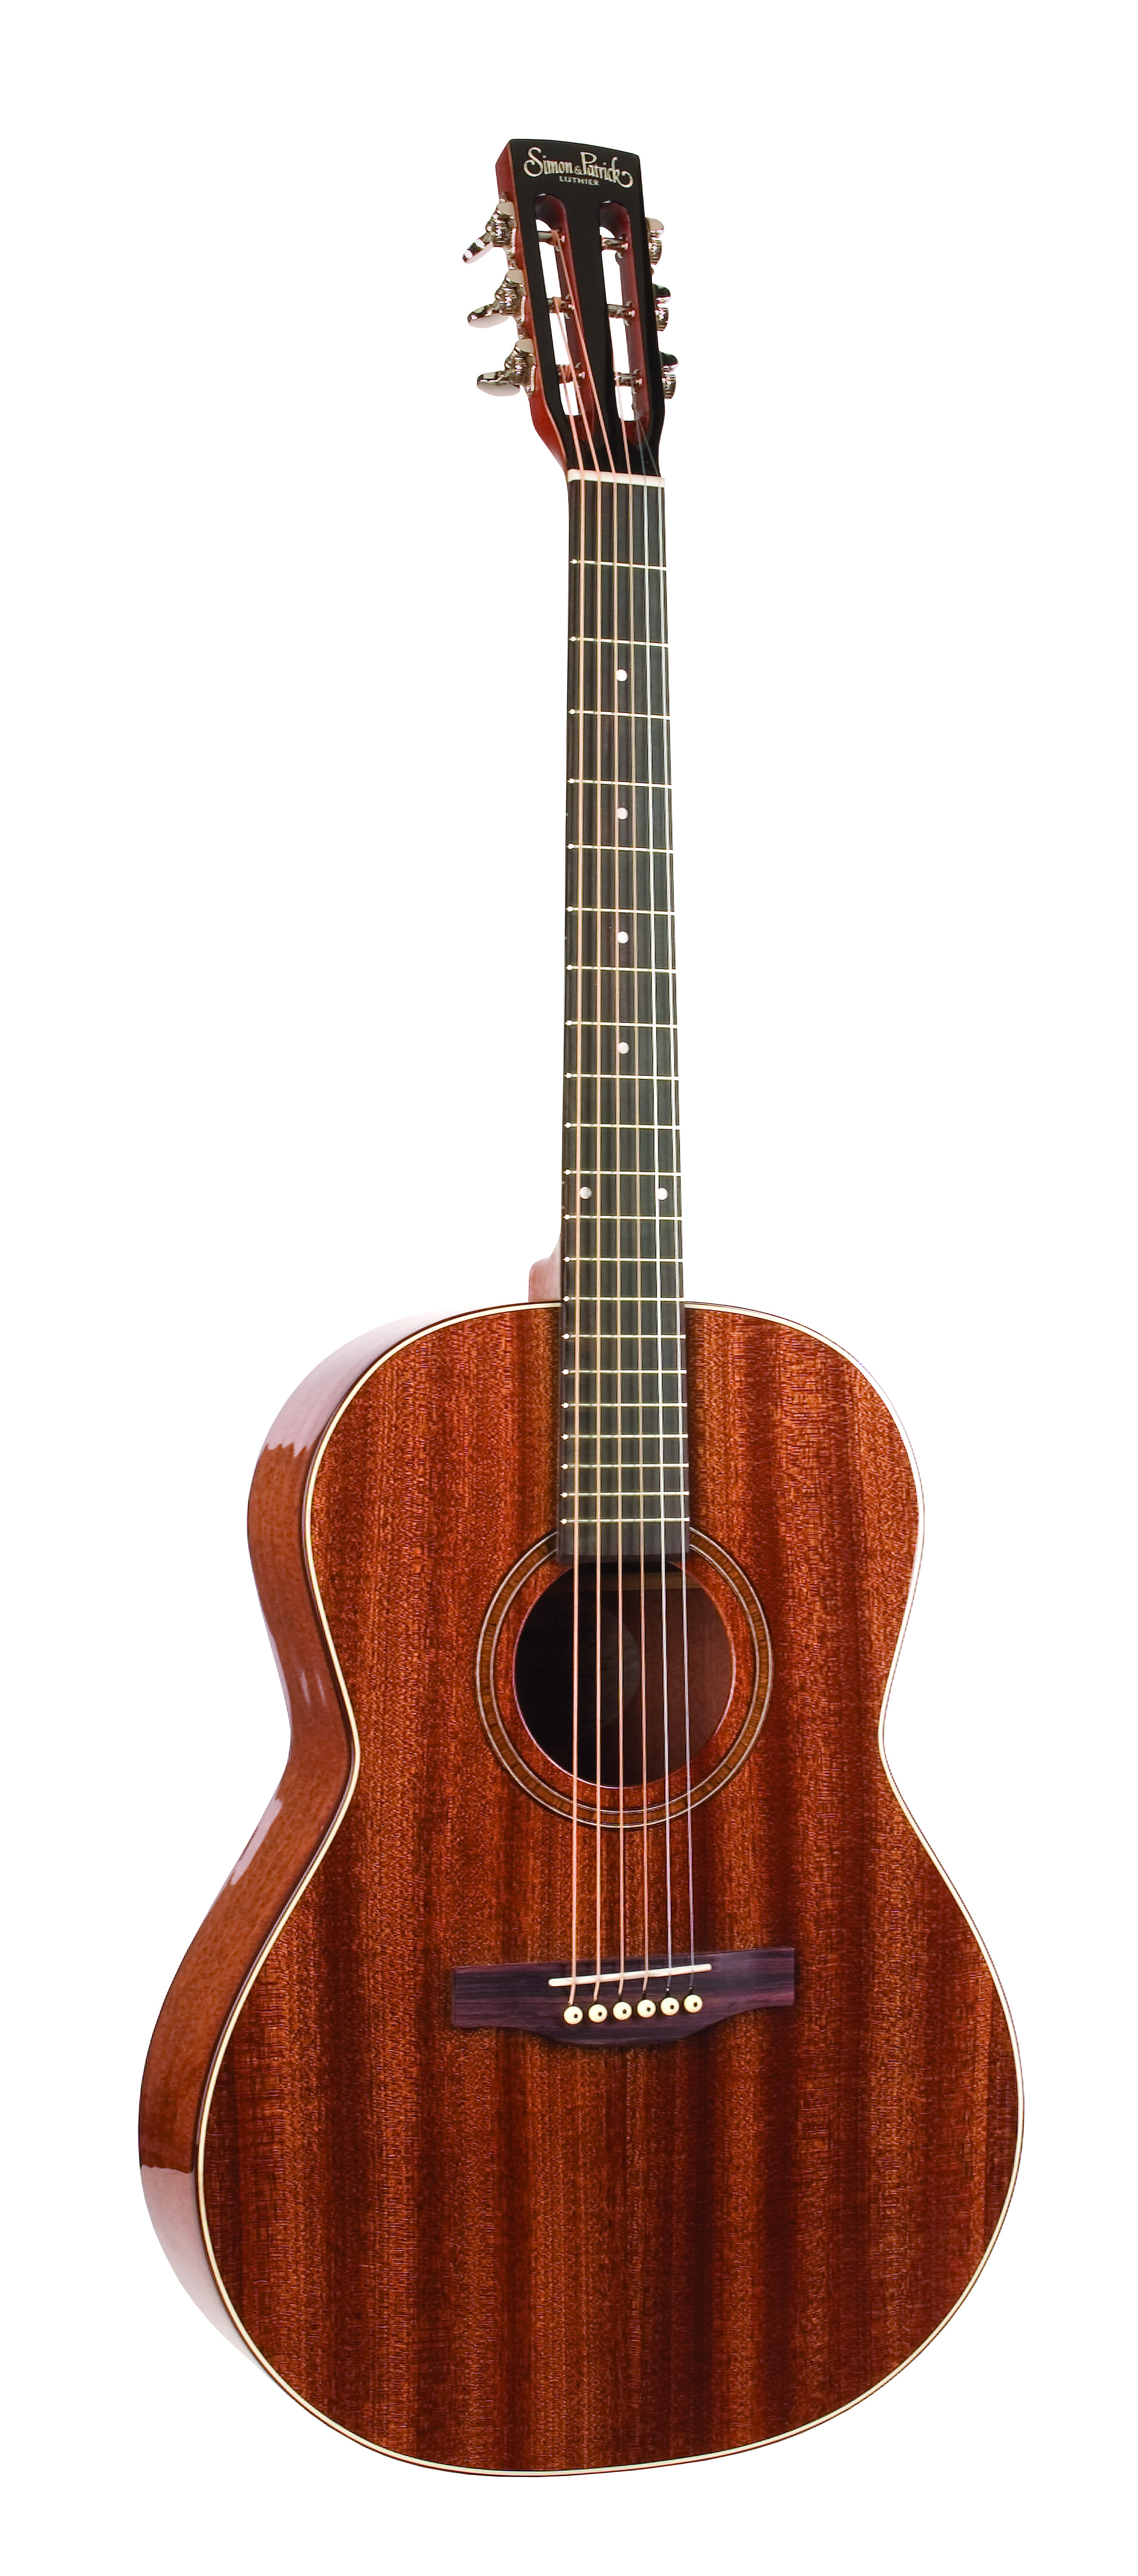 Simon & Patrick 38084 Woodland Pro Folk Mahogany Acoustic Guitar